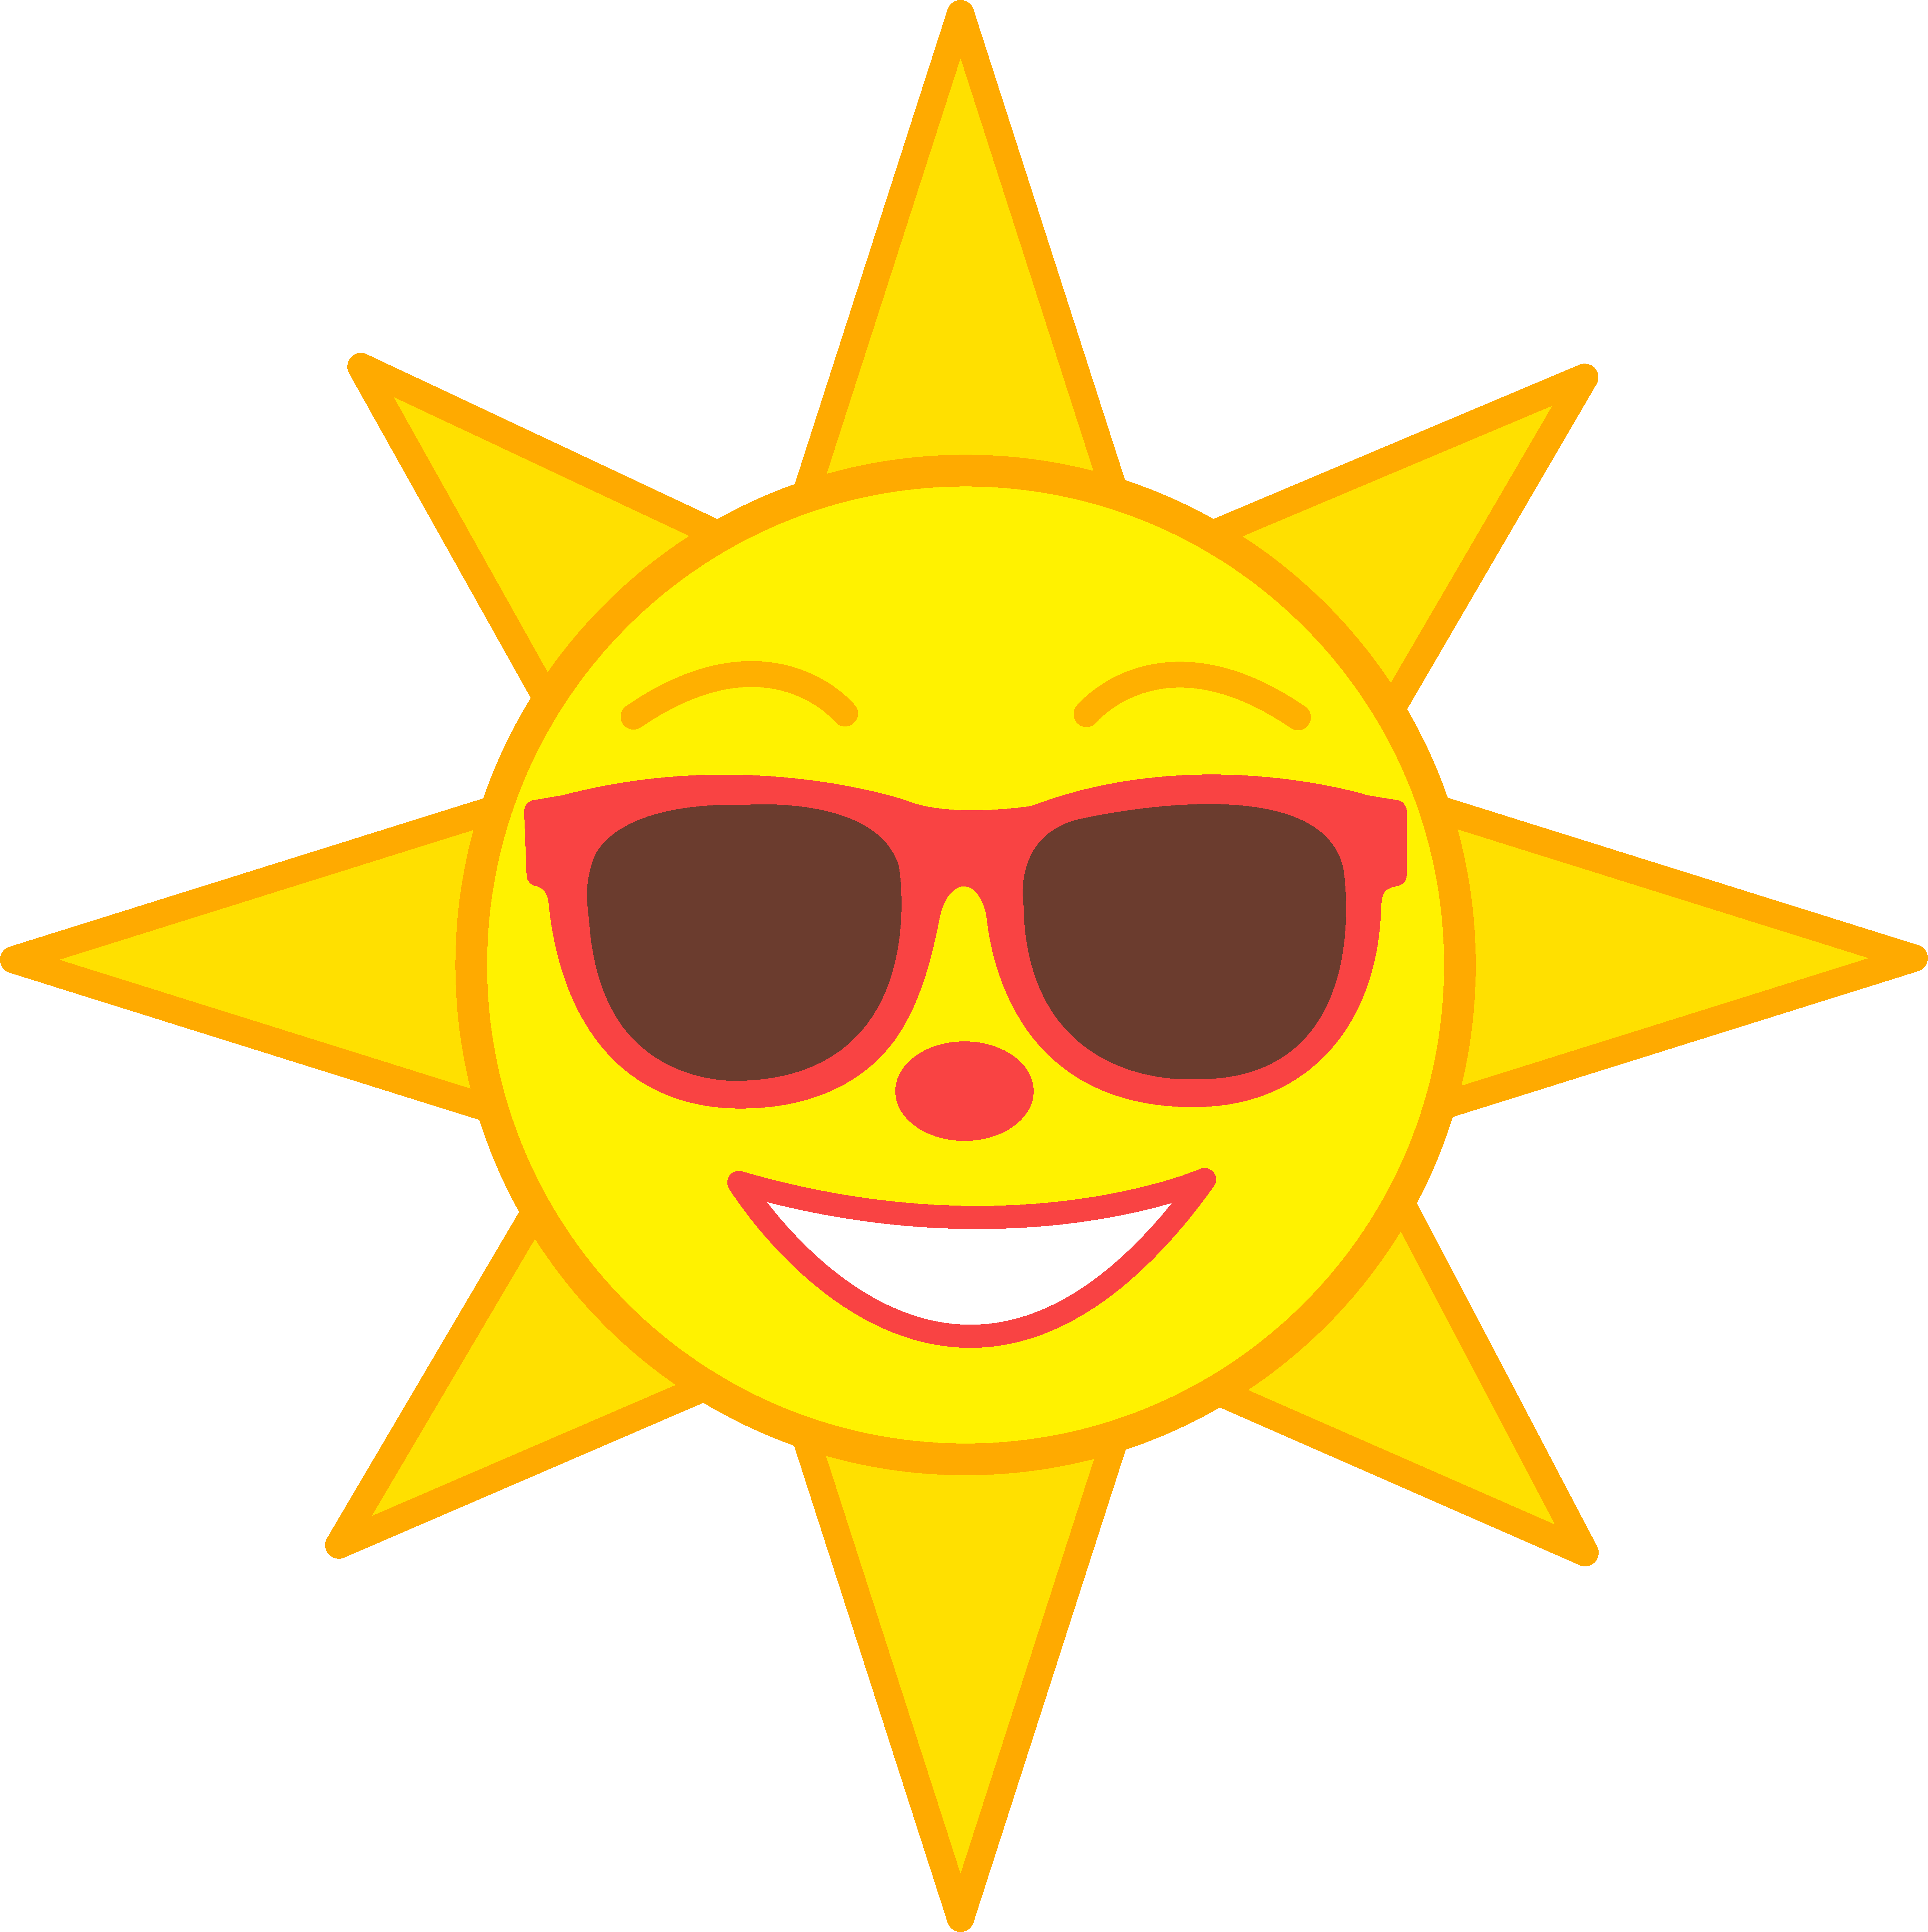 Happy Sun Clipart - Clipartion.com